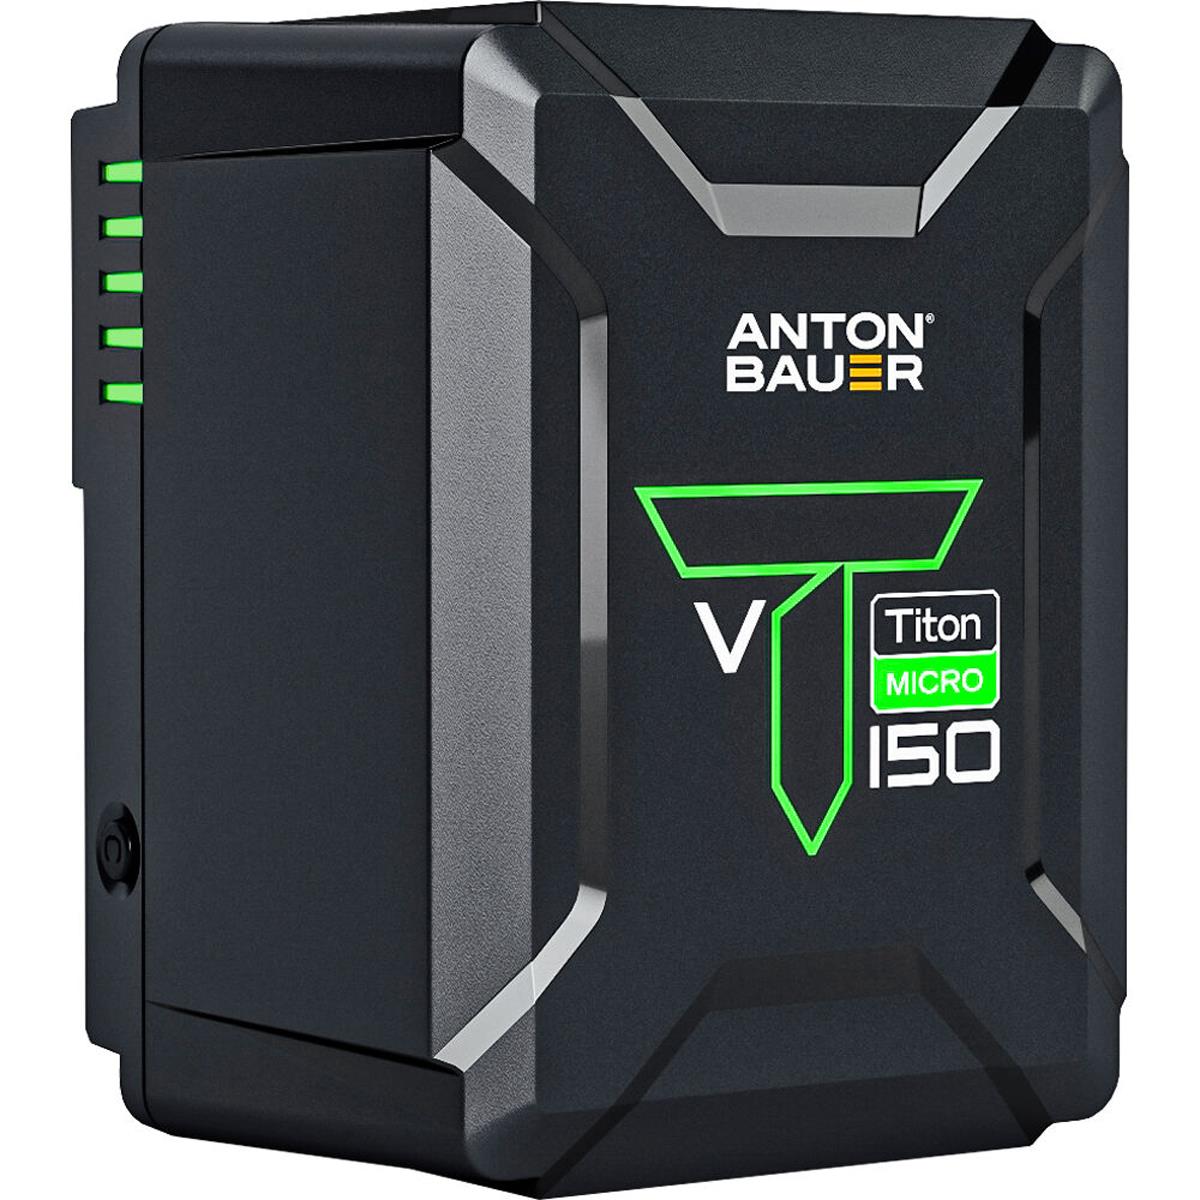 Image of Anton Bauer Titon Micro 150 V-Mount Battery